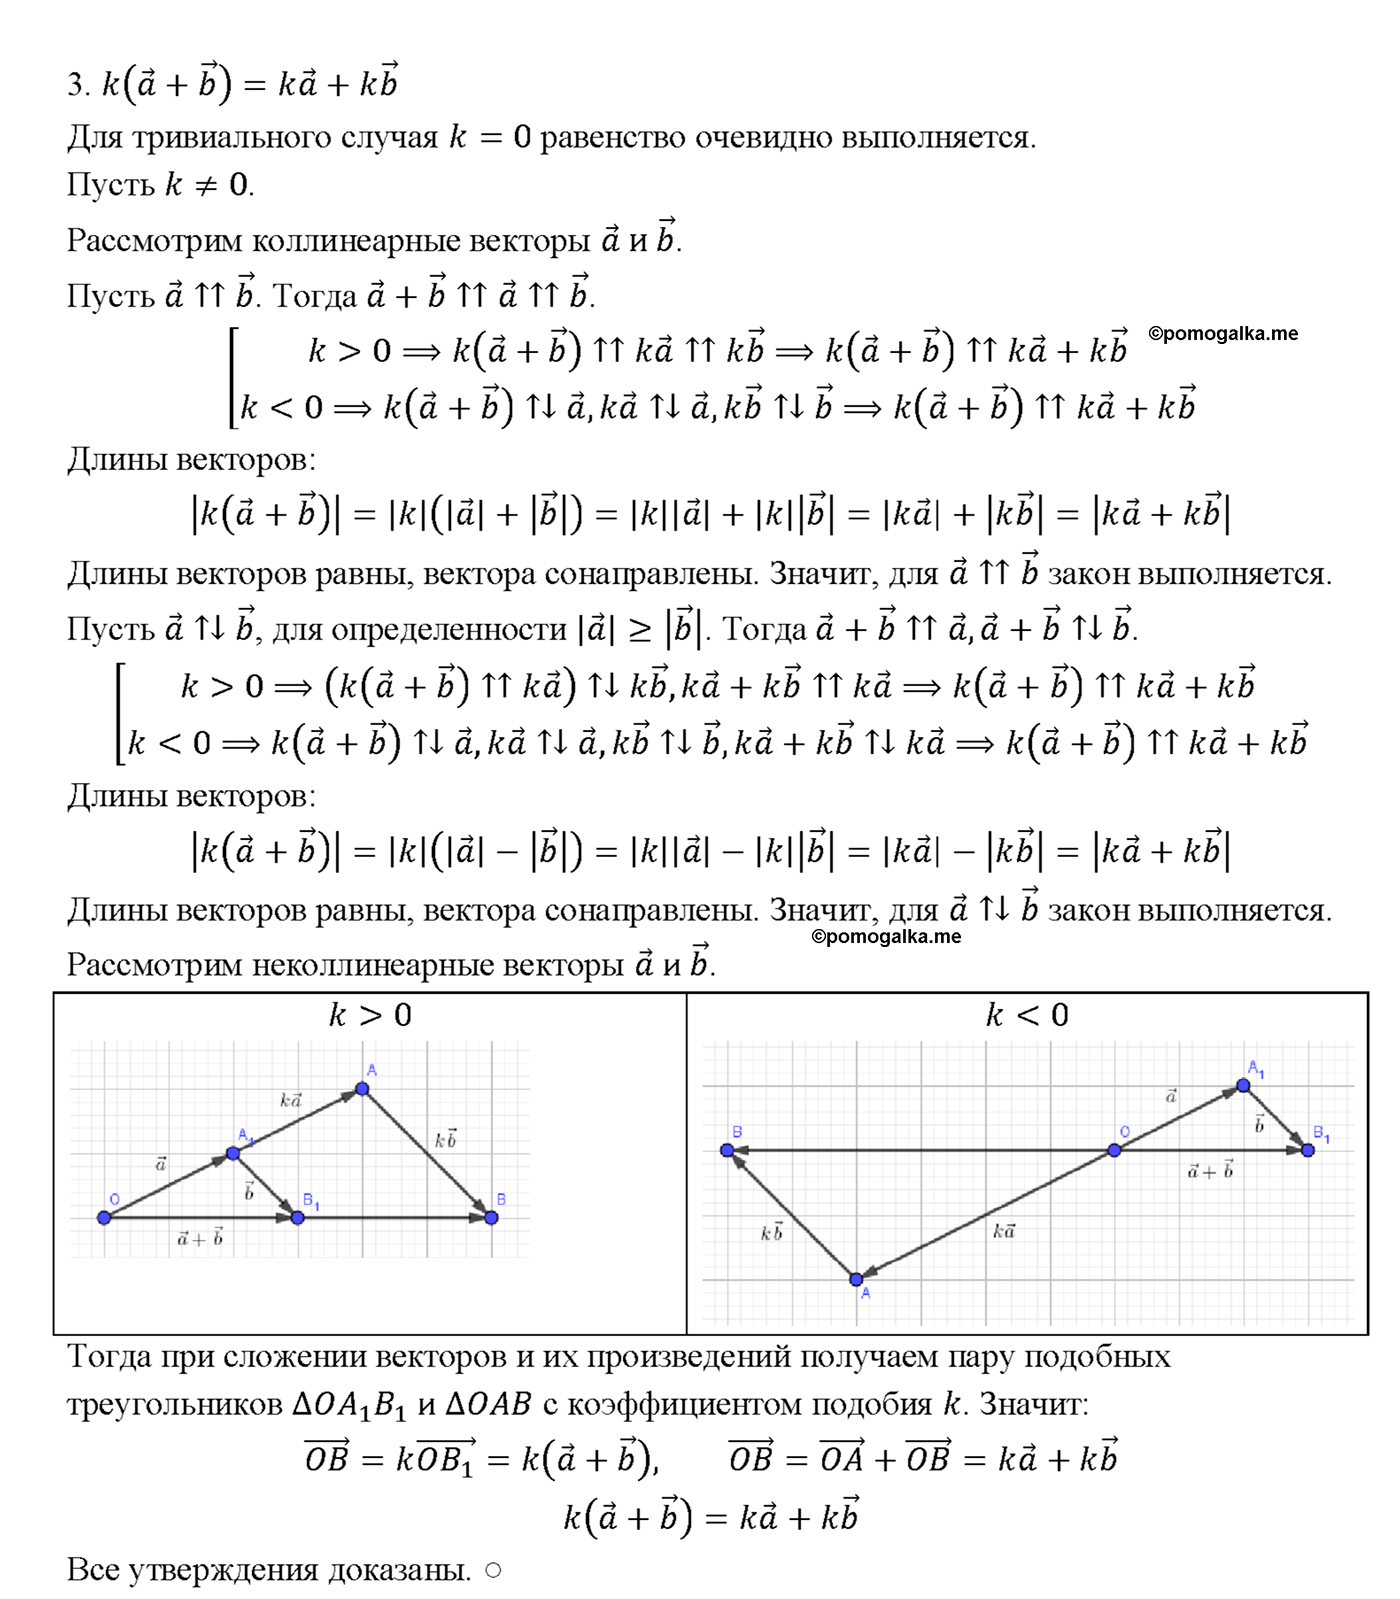 страница 219 номер 903 геометрия 7-9 класс Атанасян учебник 2014 год